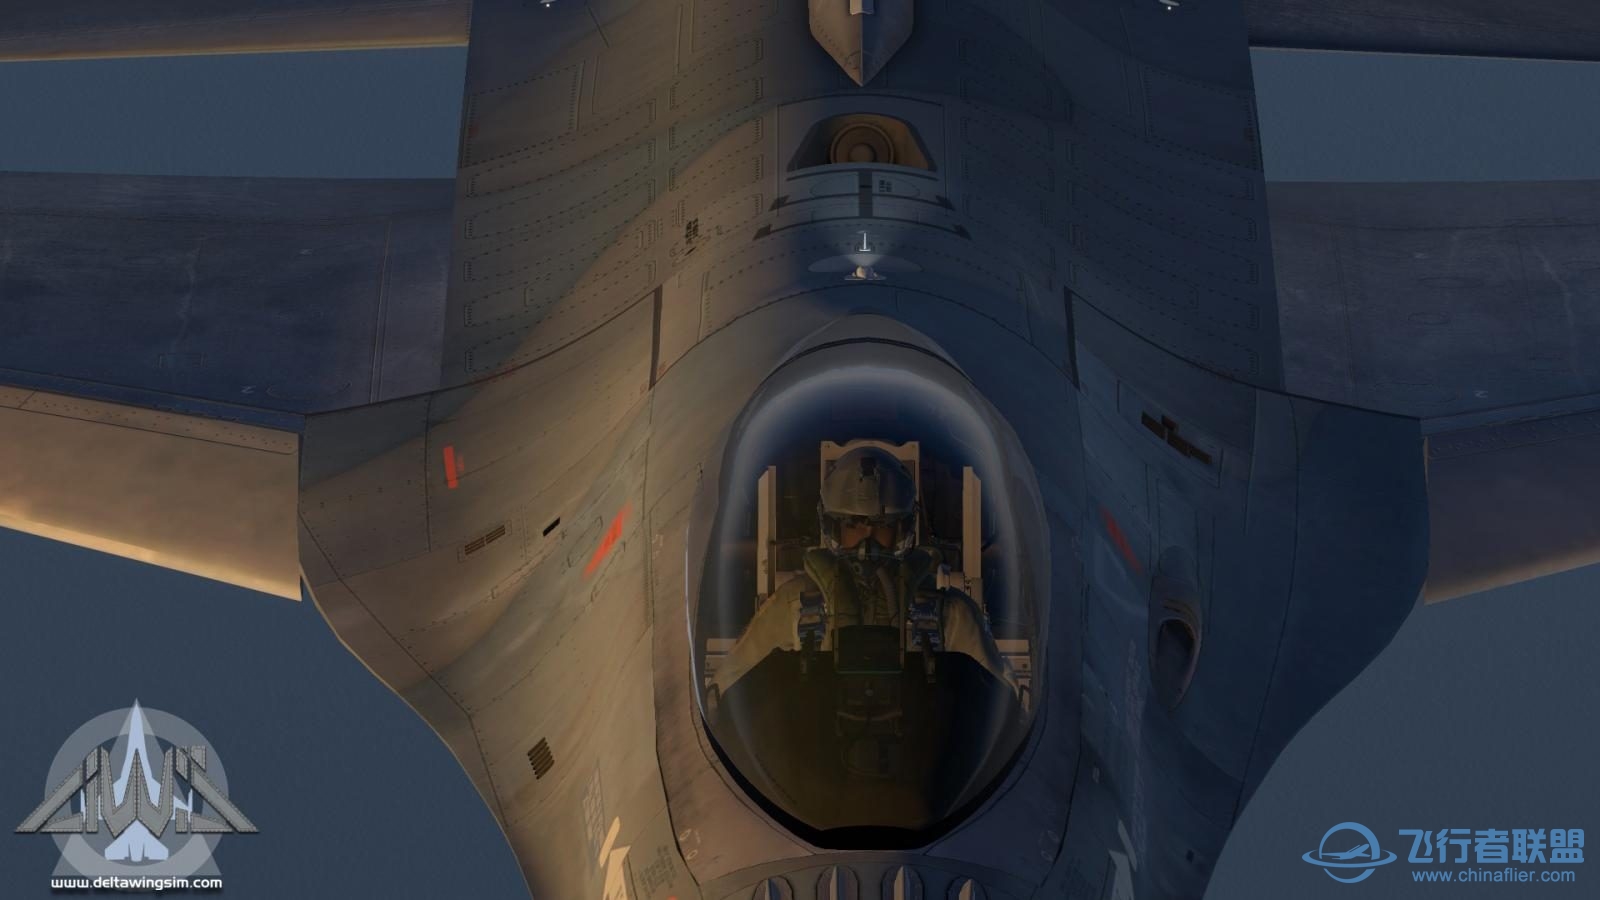 DeltaWing Simulations 发布 F-16C XPL-2510 